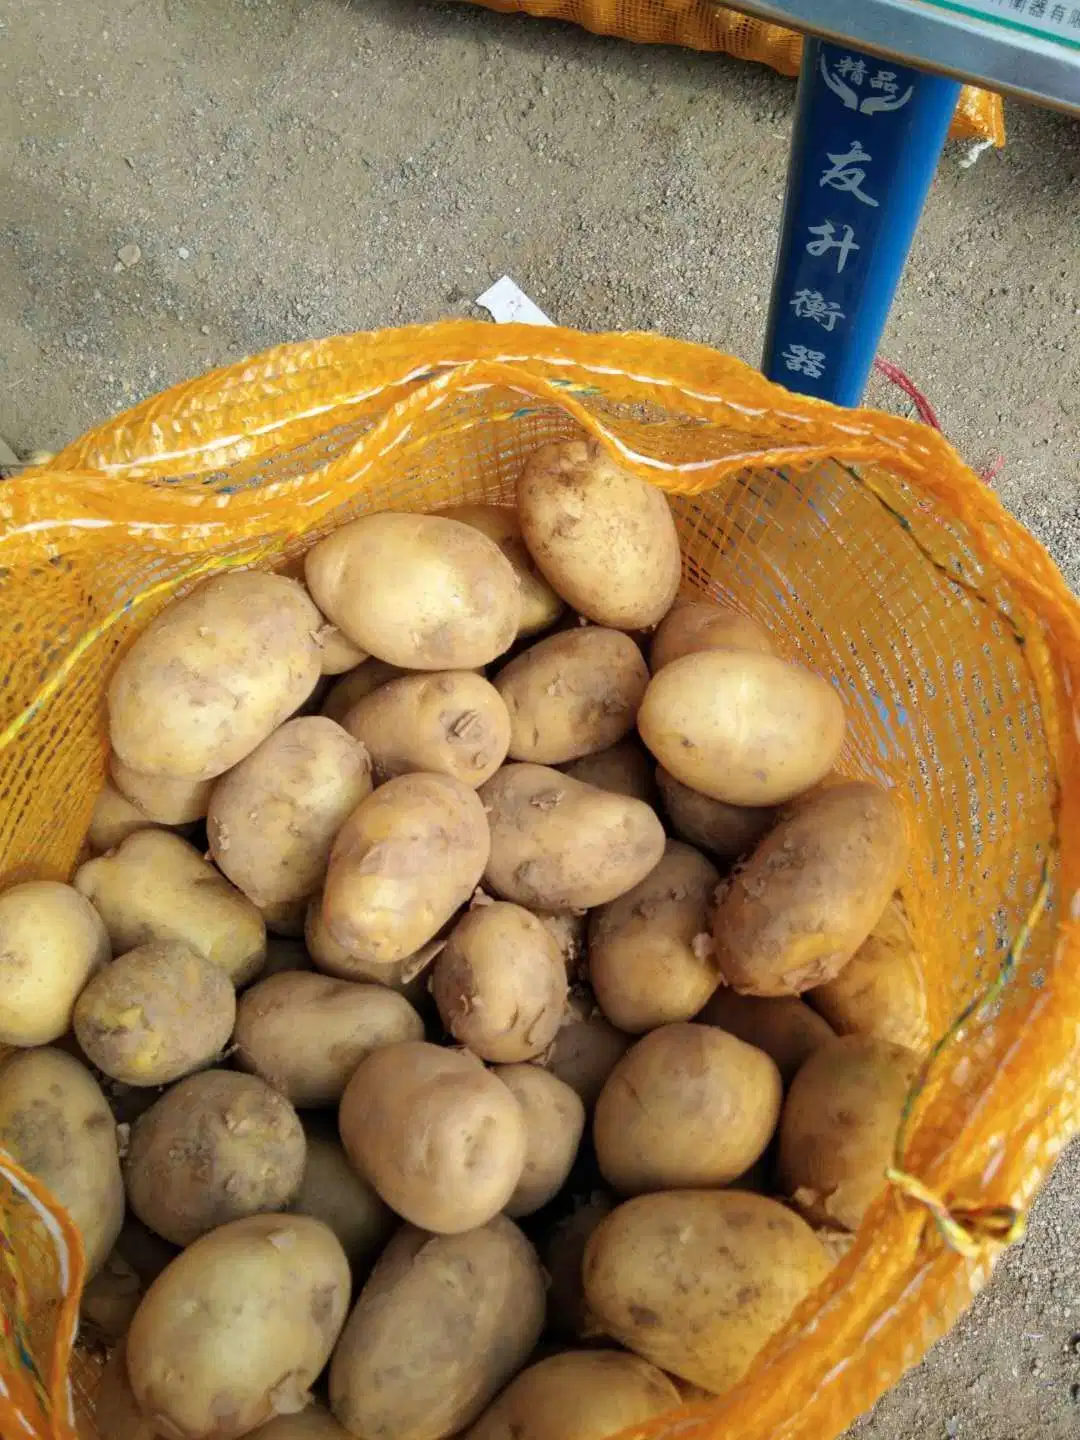 Fresh New Crop Potato From China